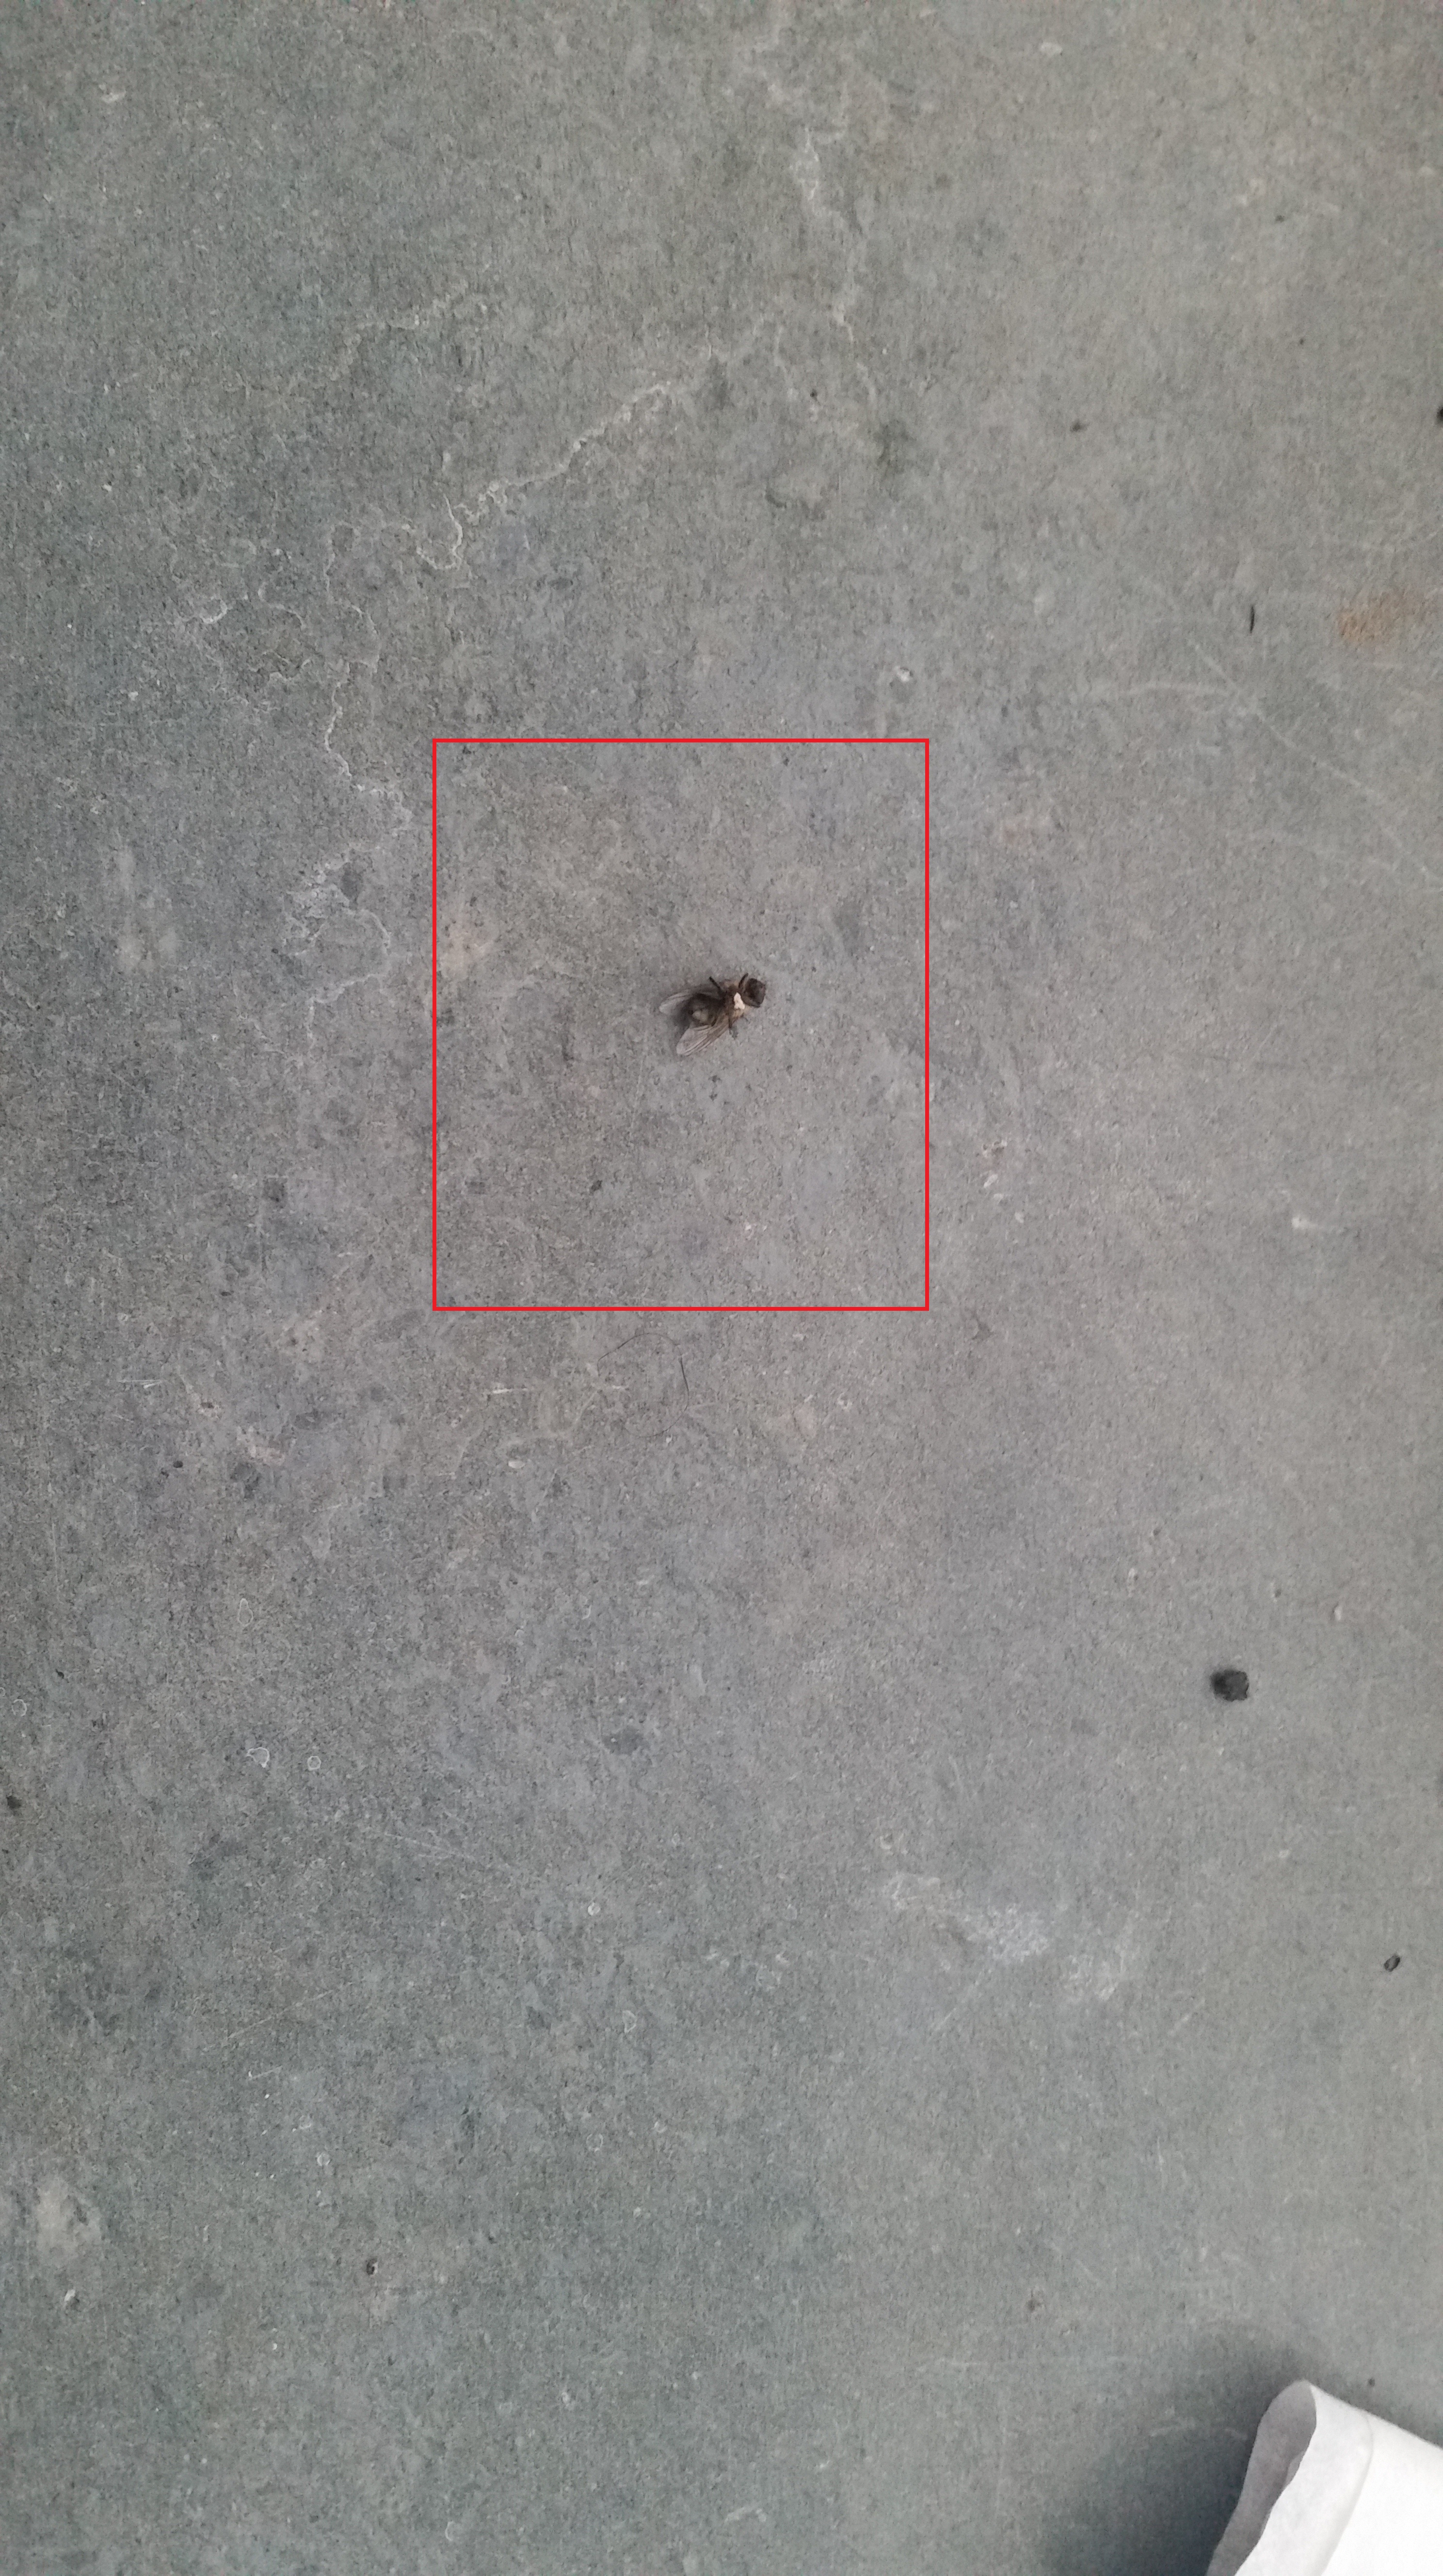 Samsung Galaxy S5 photo example dead fly